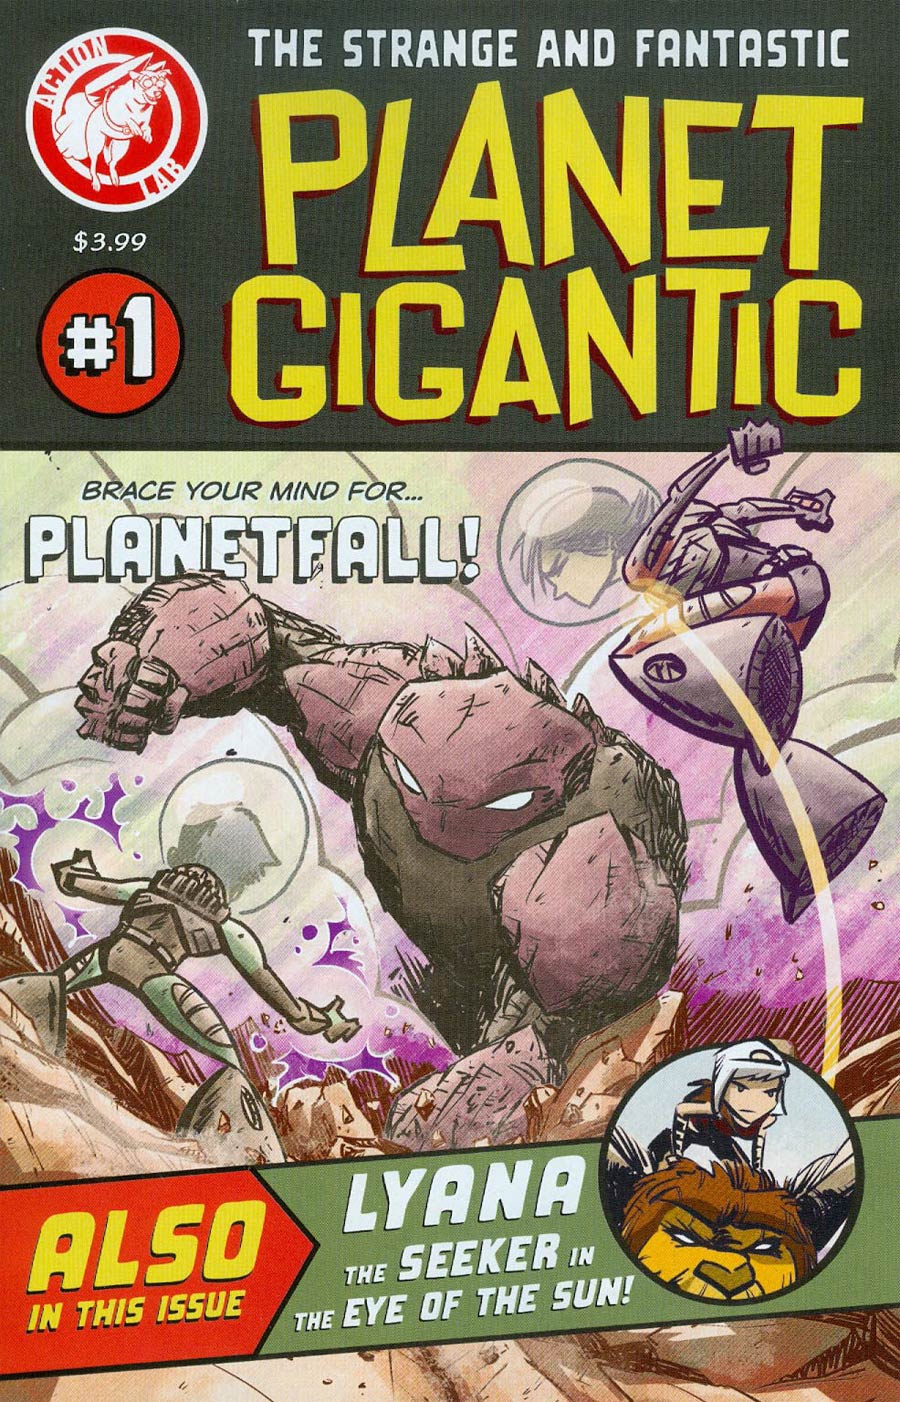 Planet Gigantic #1